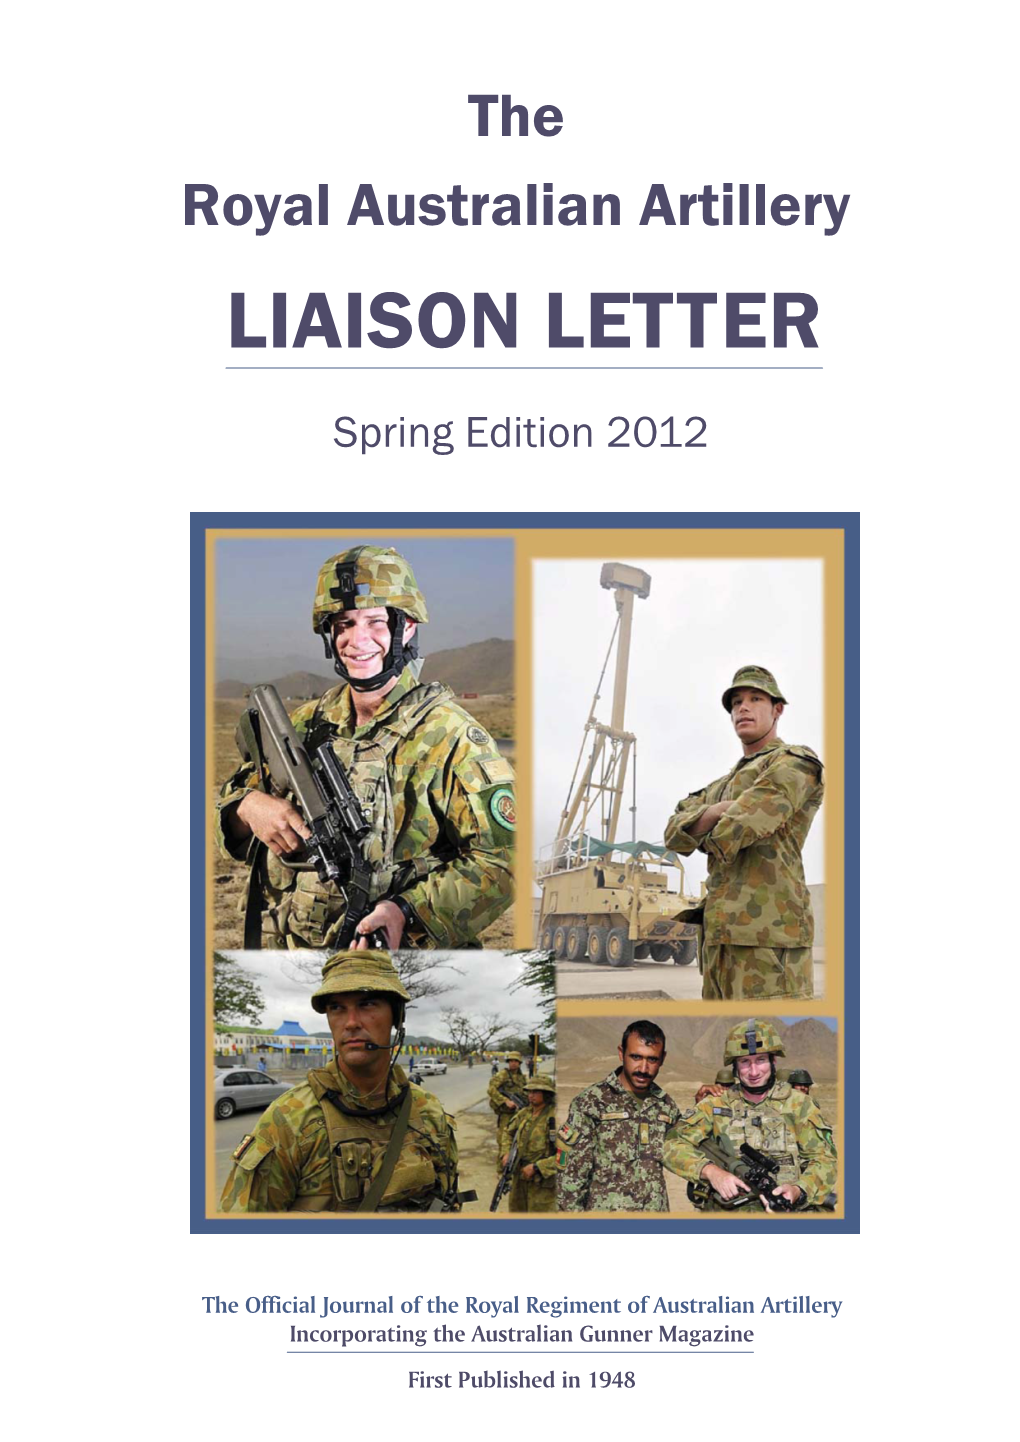 RAA Liaison Letter Spring 2012